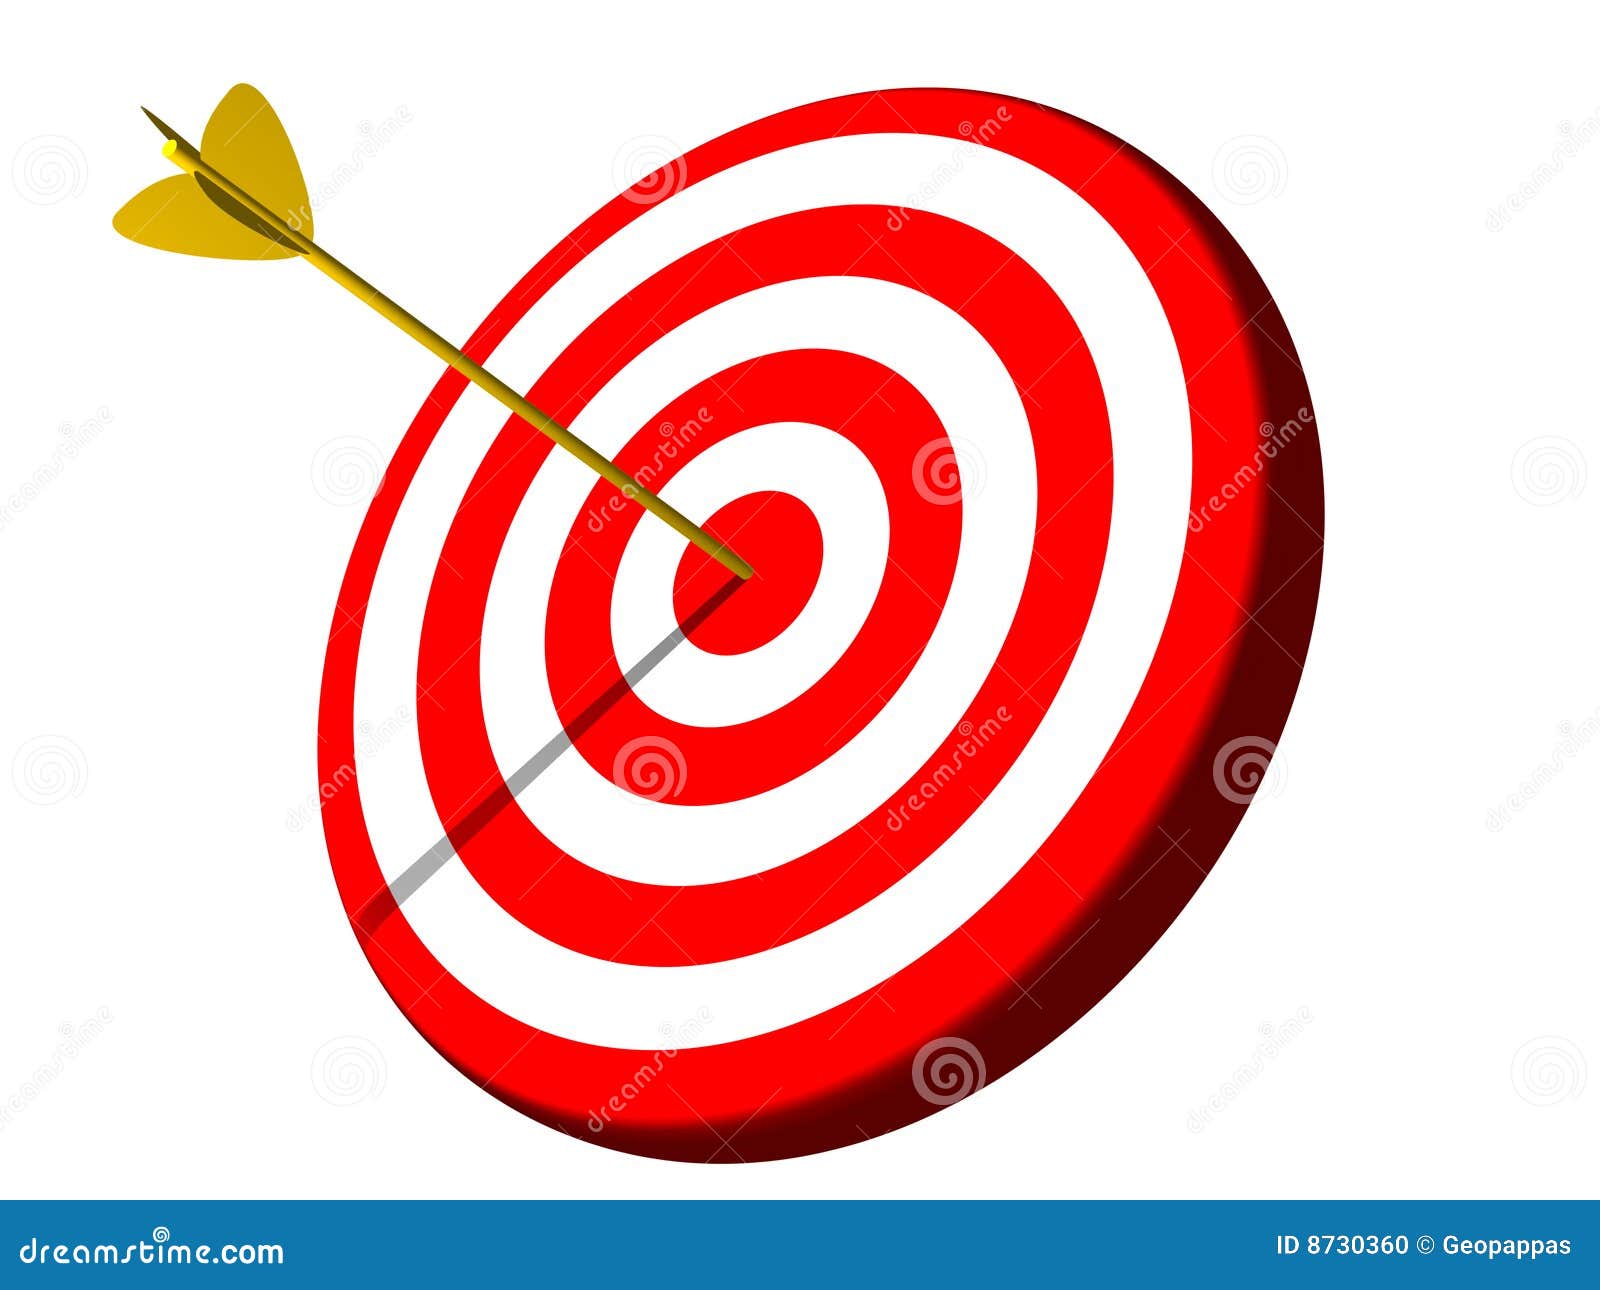 clipart targets bullseye - photo #38